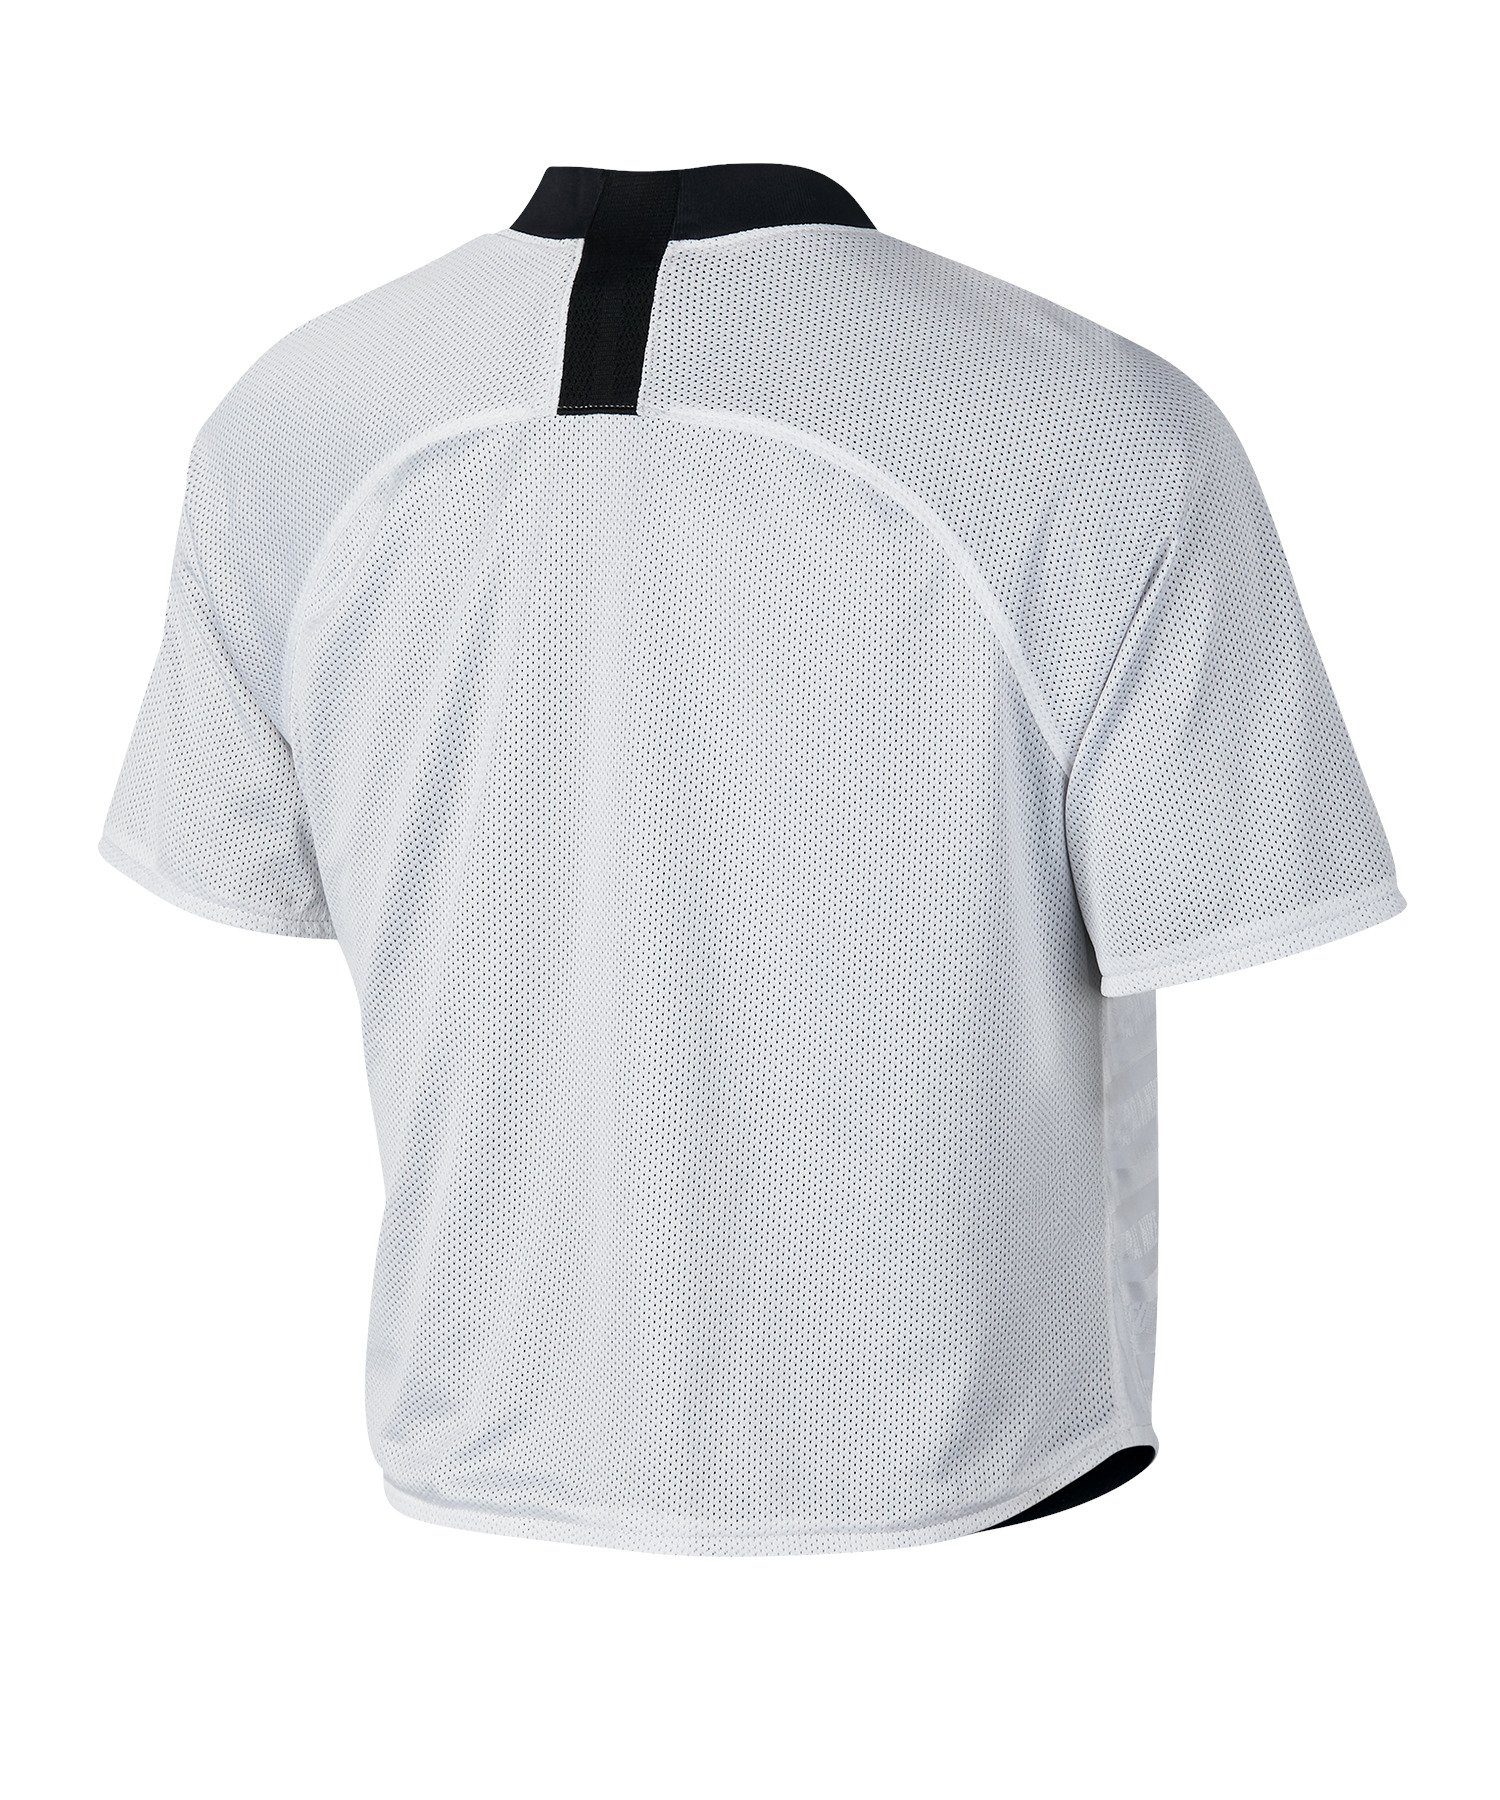 Top T-Shirt Sportswear Crop Damen Nike Schwarz default F.C.